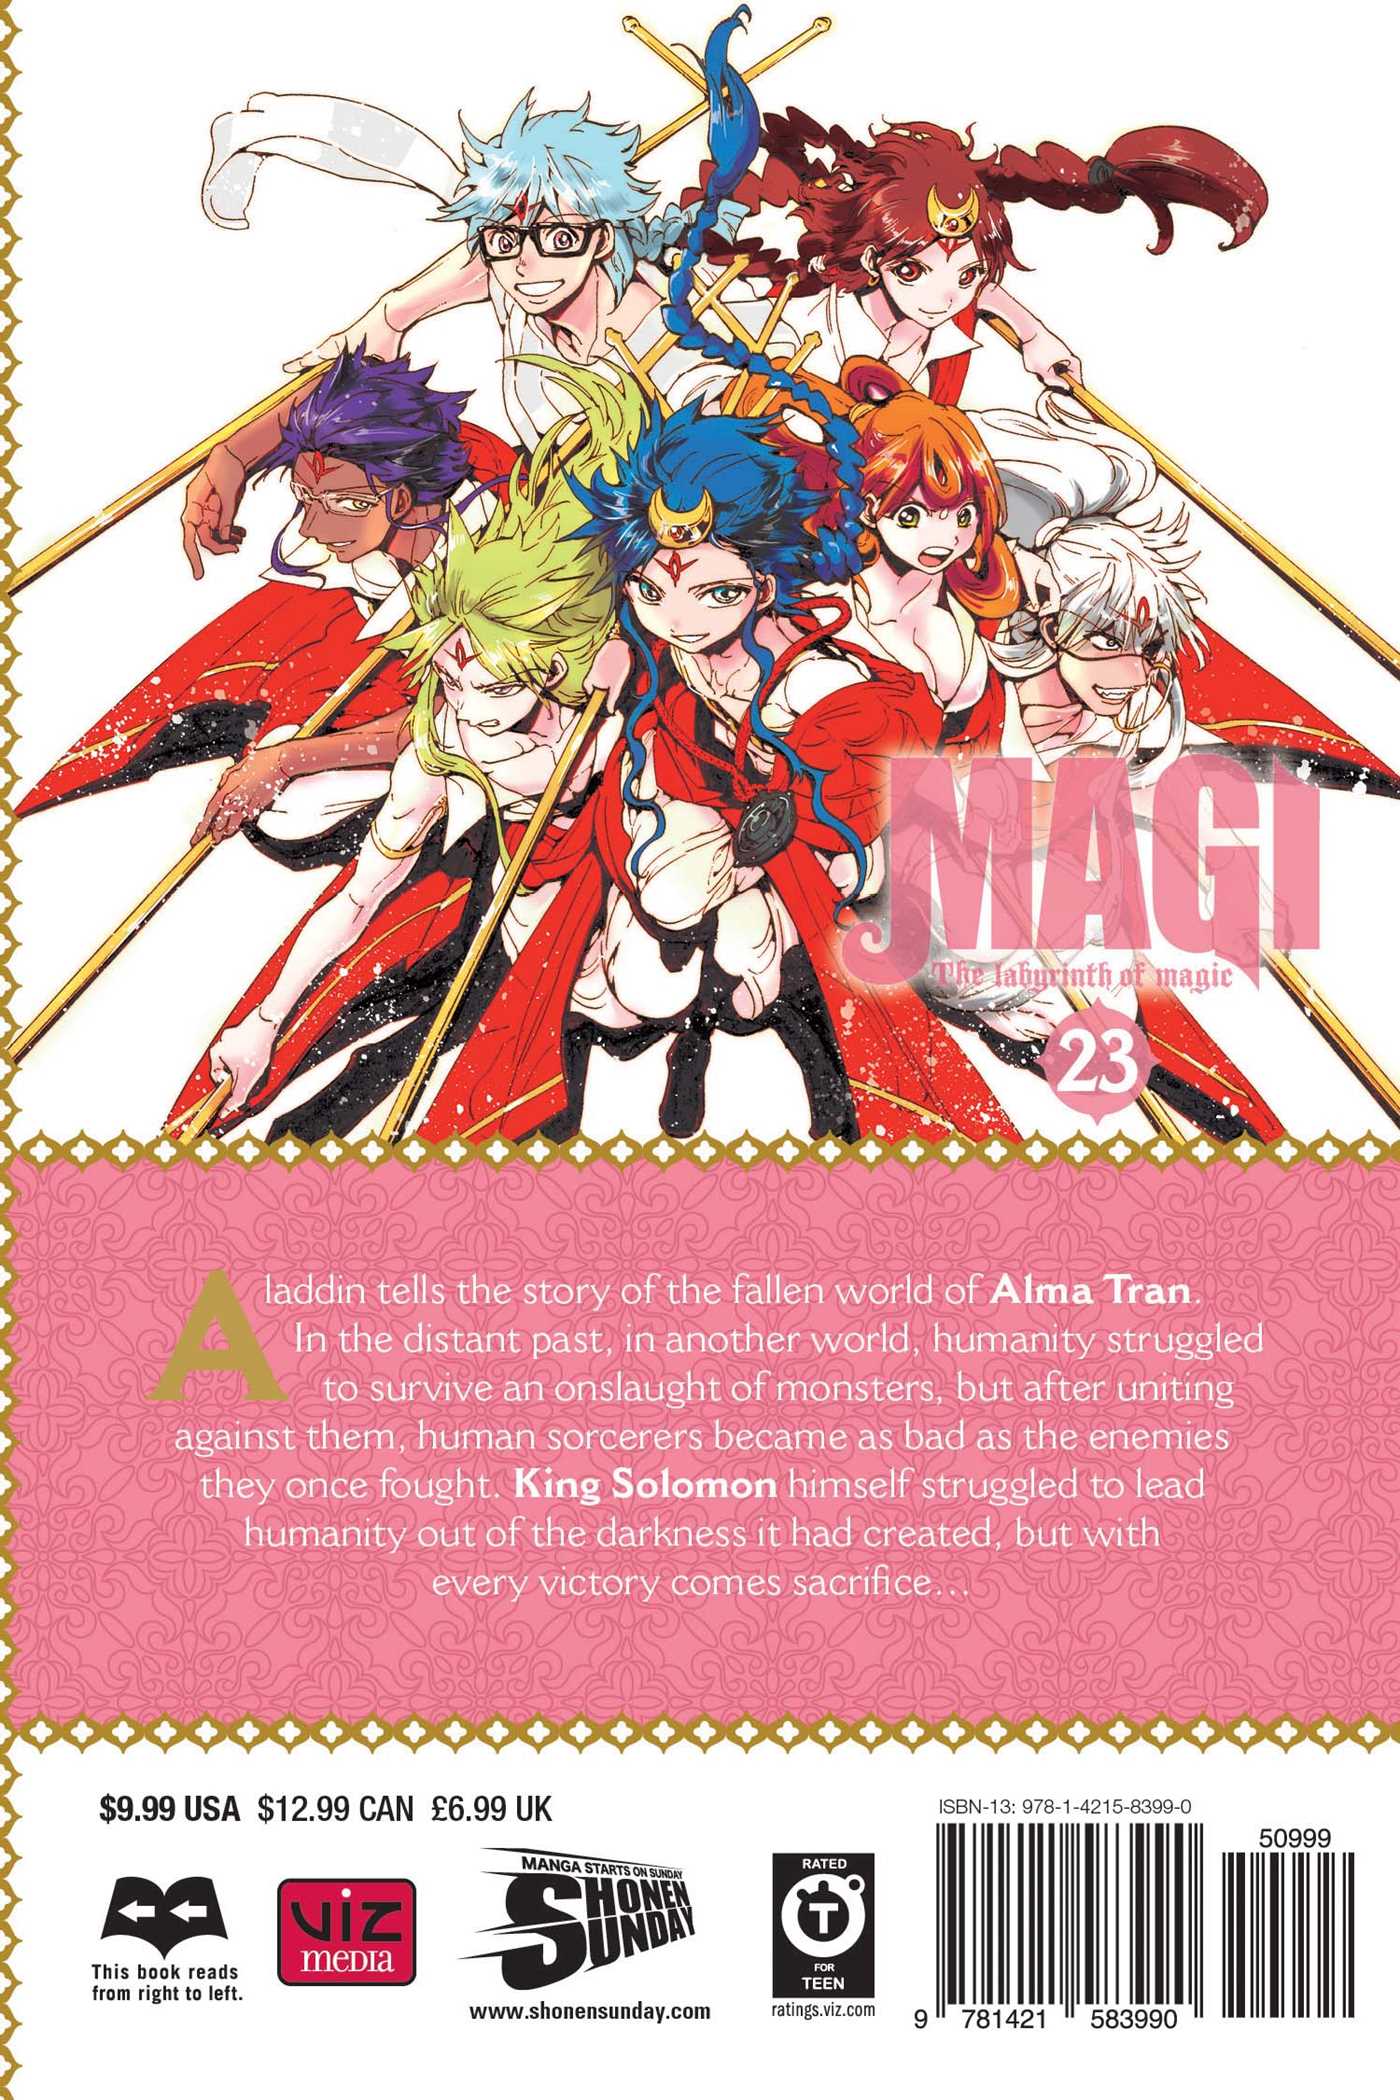 Magi Manga Volume 23 | Crunchyroll Store